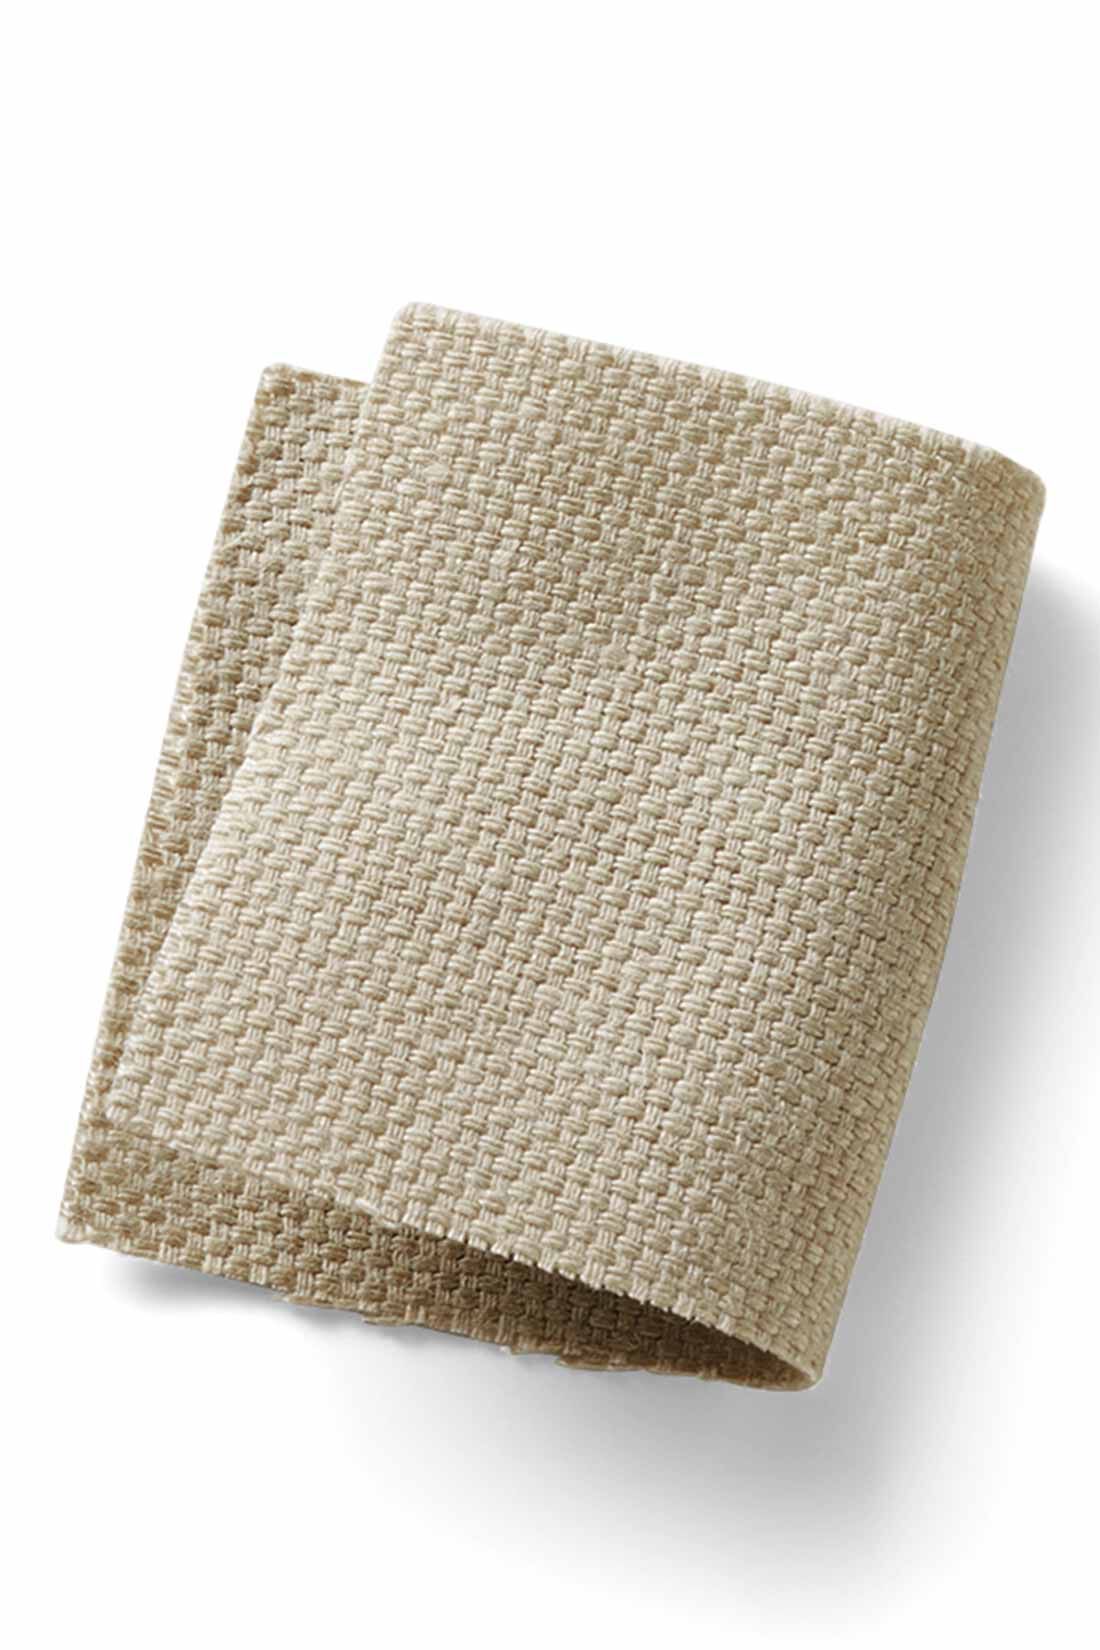 MEDE19F|MEDE19F　リネン混ベスト|麻・レーヨン混のざっくりした布はく生地。ナチュラルな風合いと適度な厚みも上品。